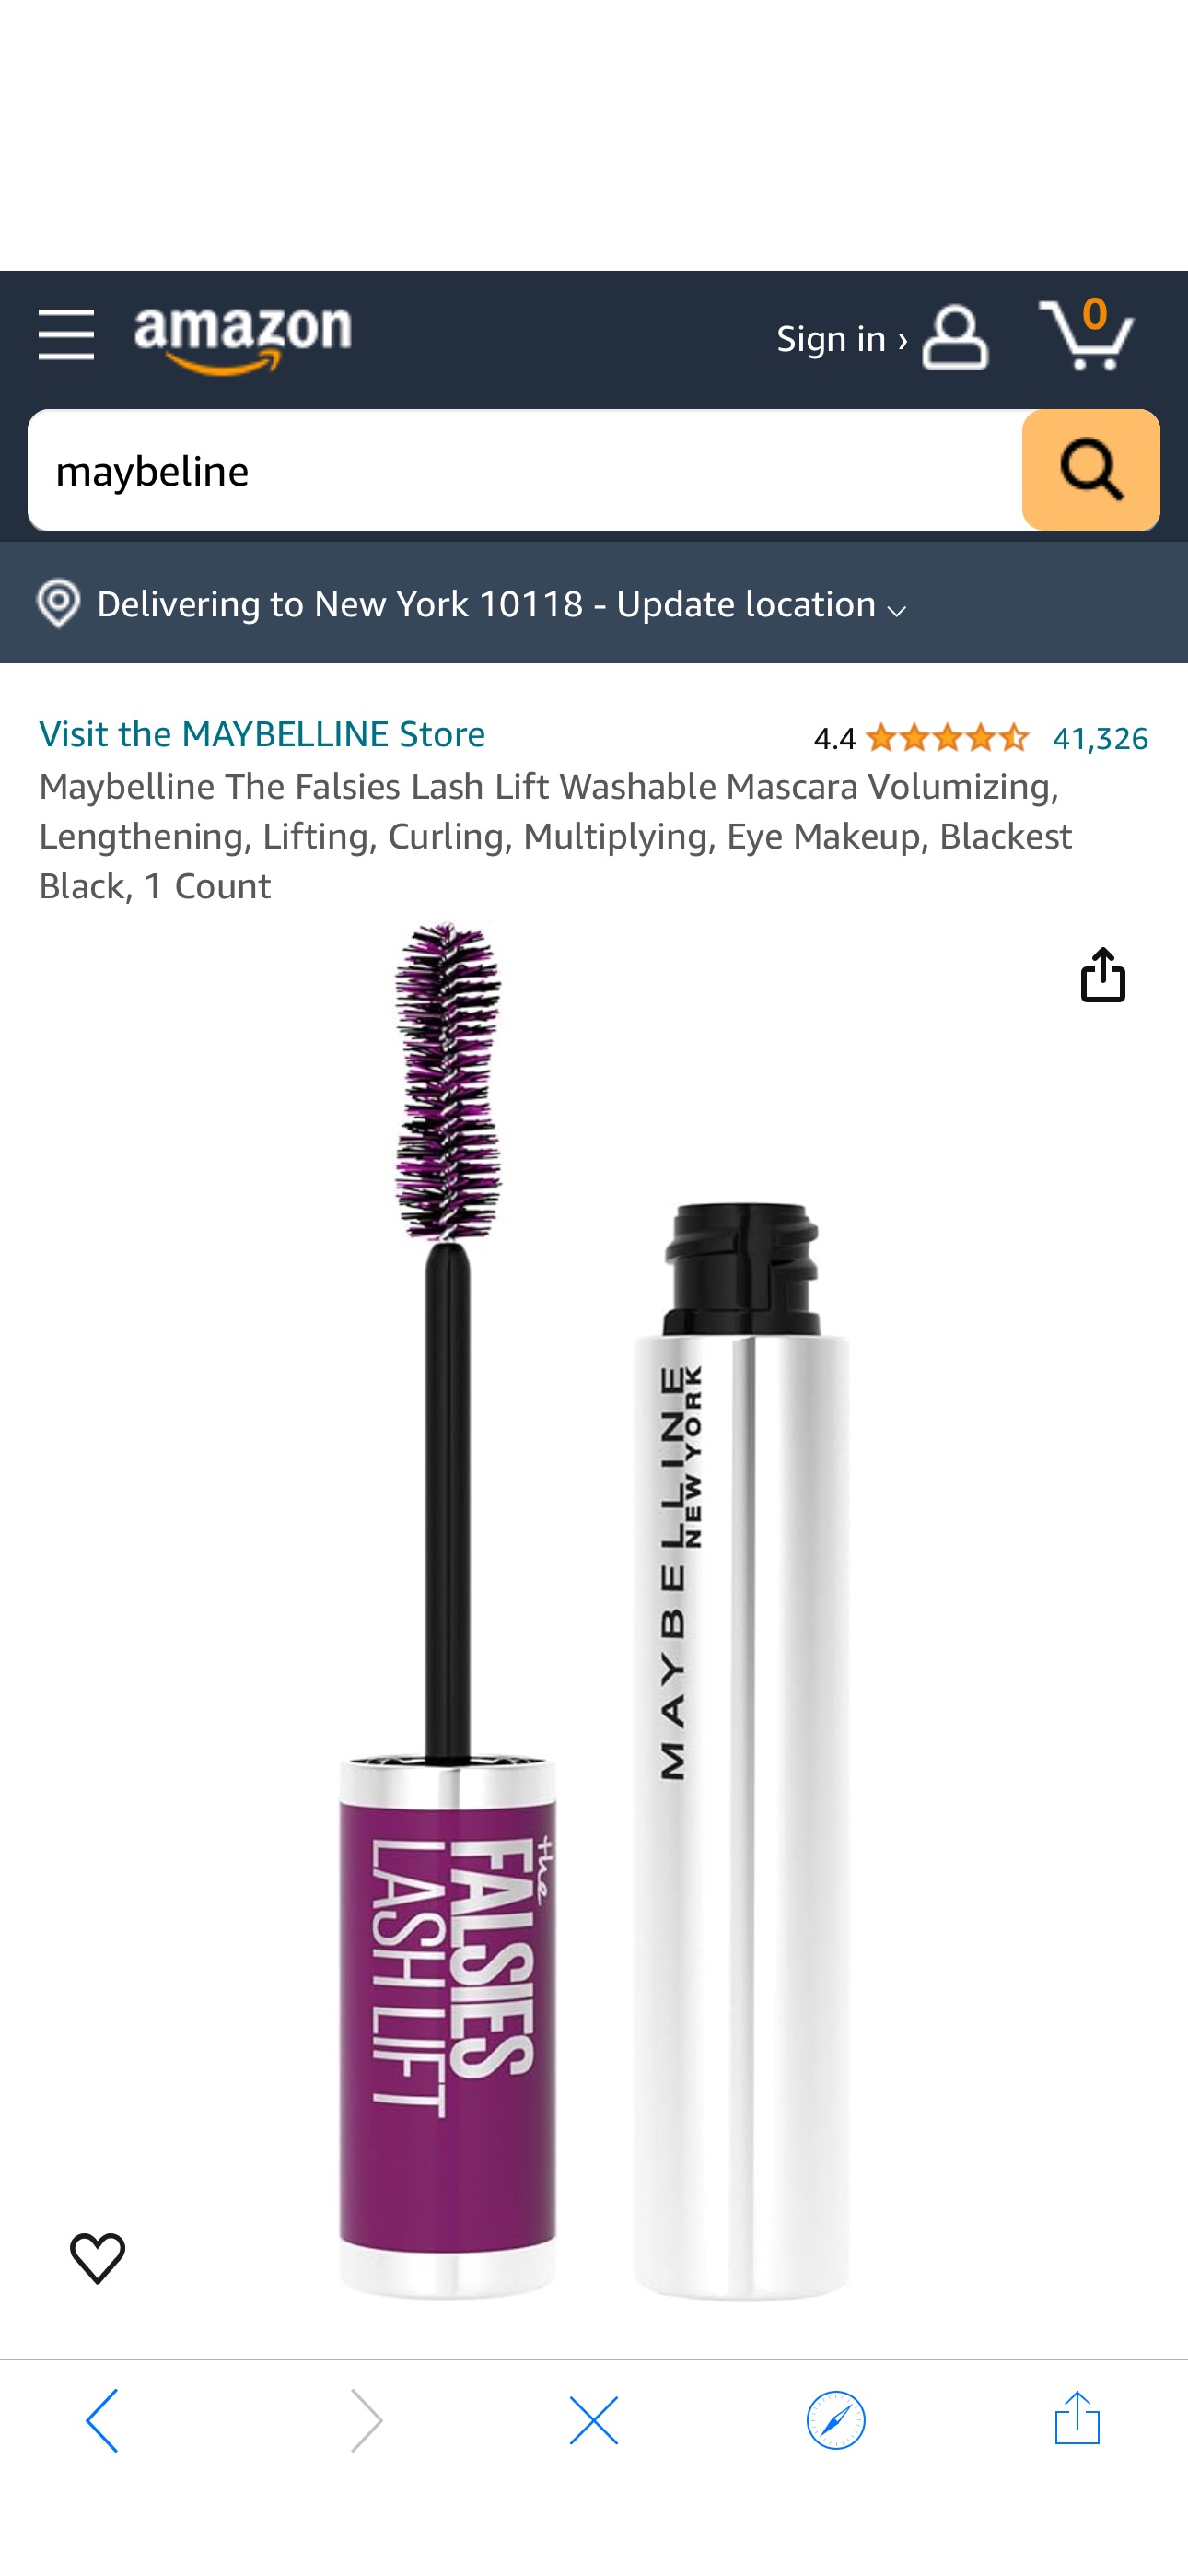 Amazon.com : Maybelline The Falsies Lash Lift Washable Mascara Volumizing, Lengthening, Lifting, Curling, Multiplying, Eye Makeup, Blackest Black, 1 Count : Beauty & Personal Care